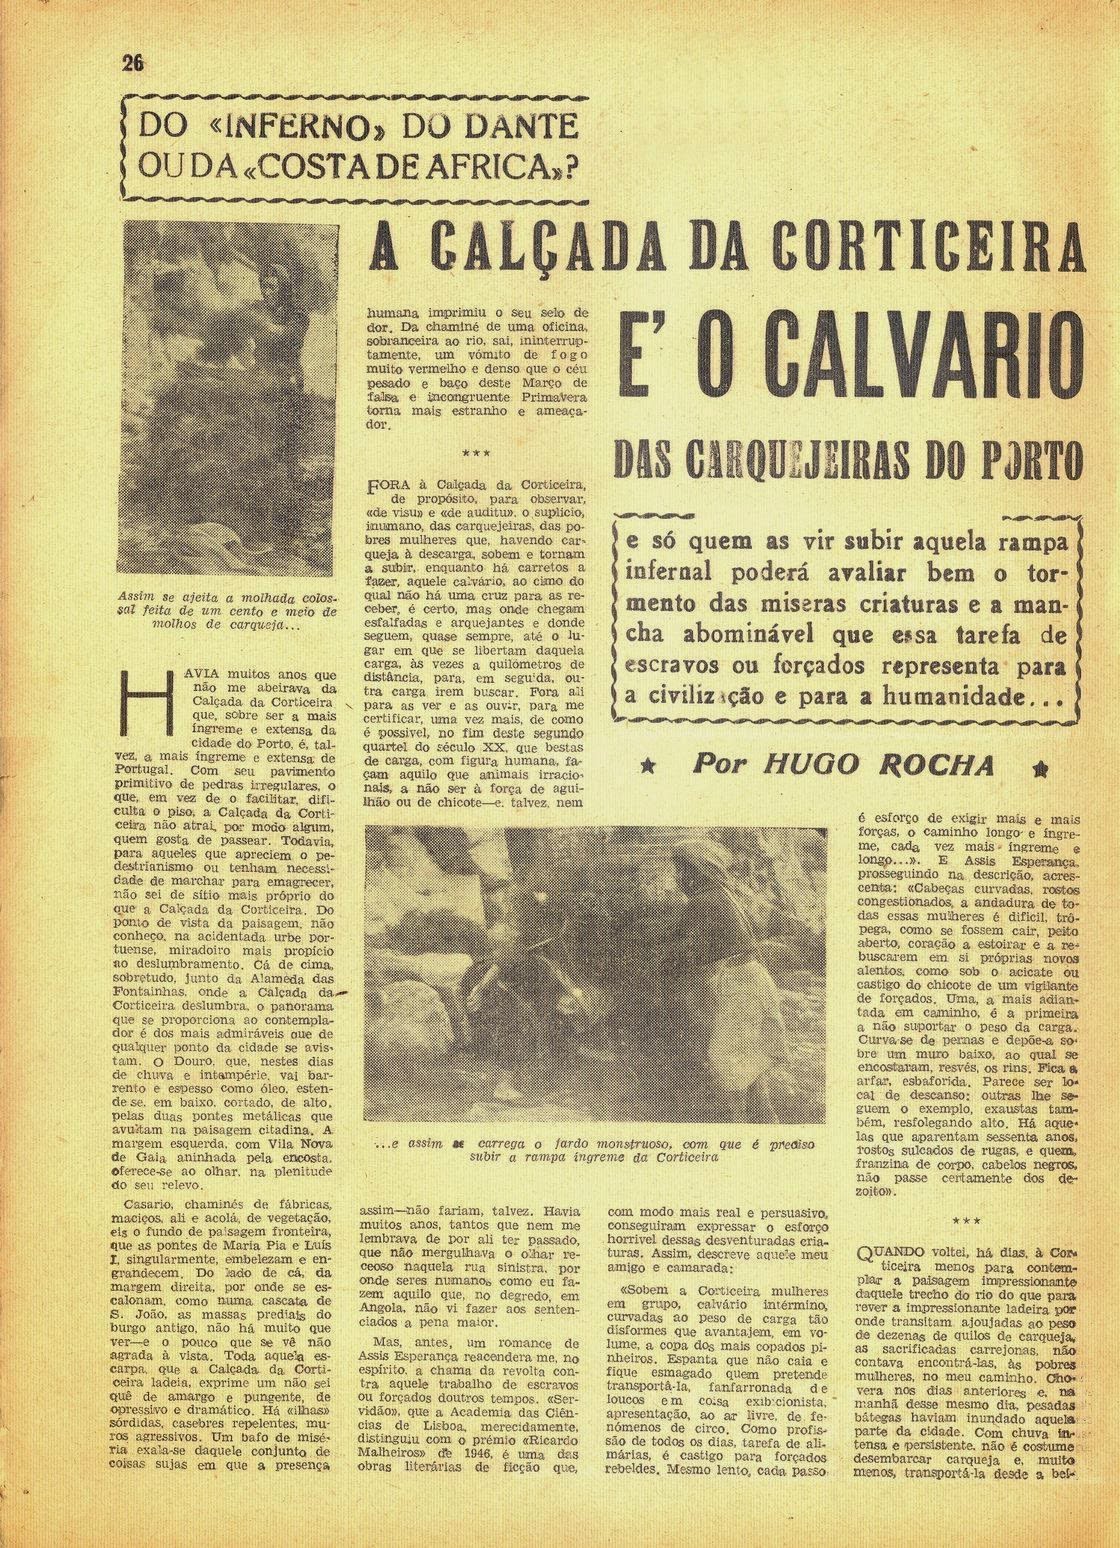 Article d'Hugo Rocha, édition “Monumentos Esquecidos” ©Século Ilustrado, 19 avril 1943